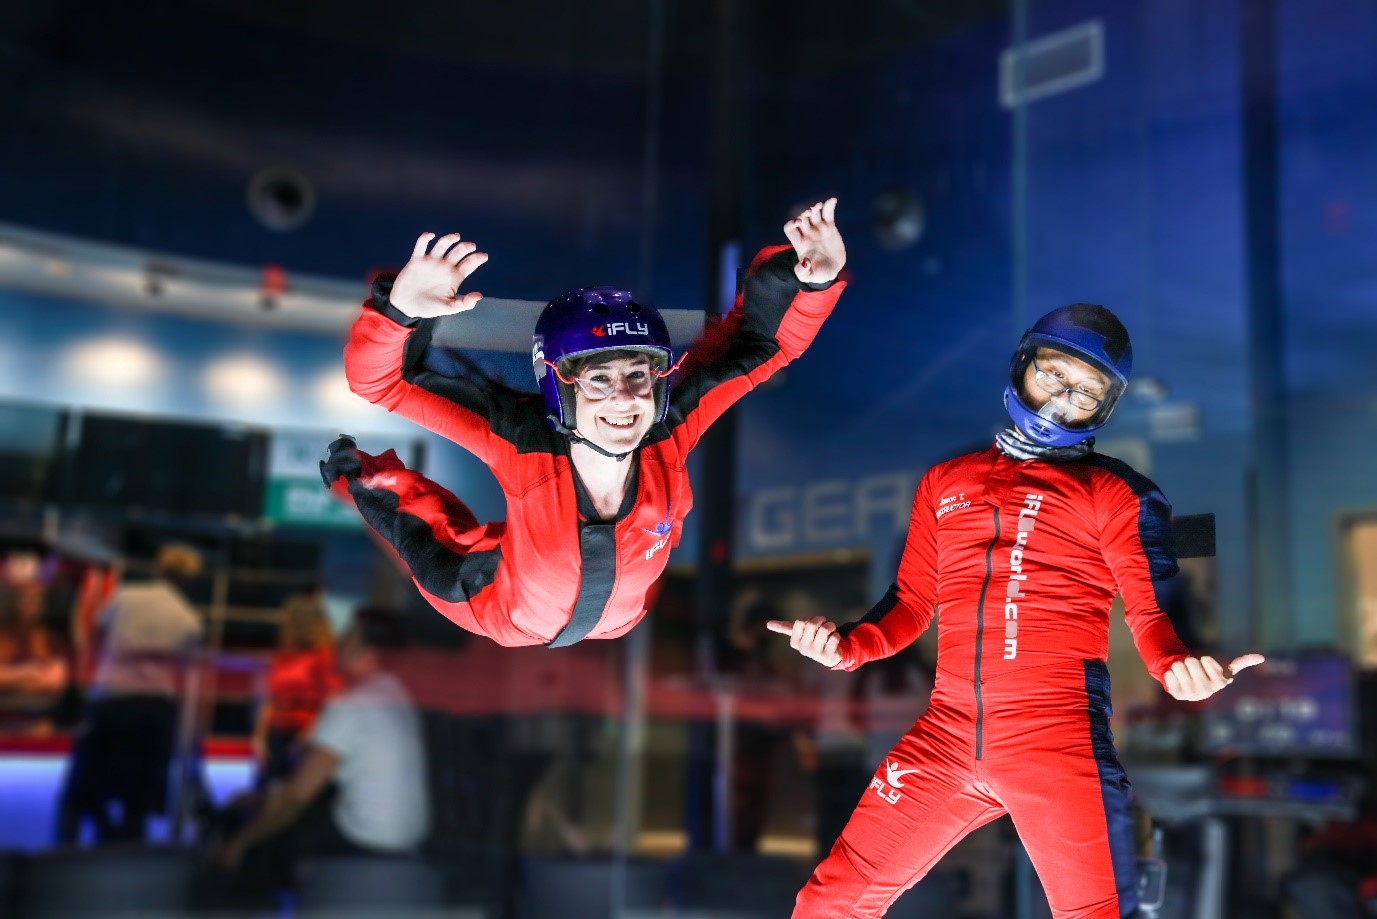 VR skydiving